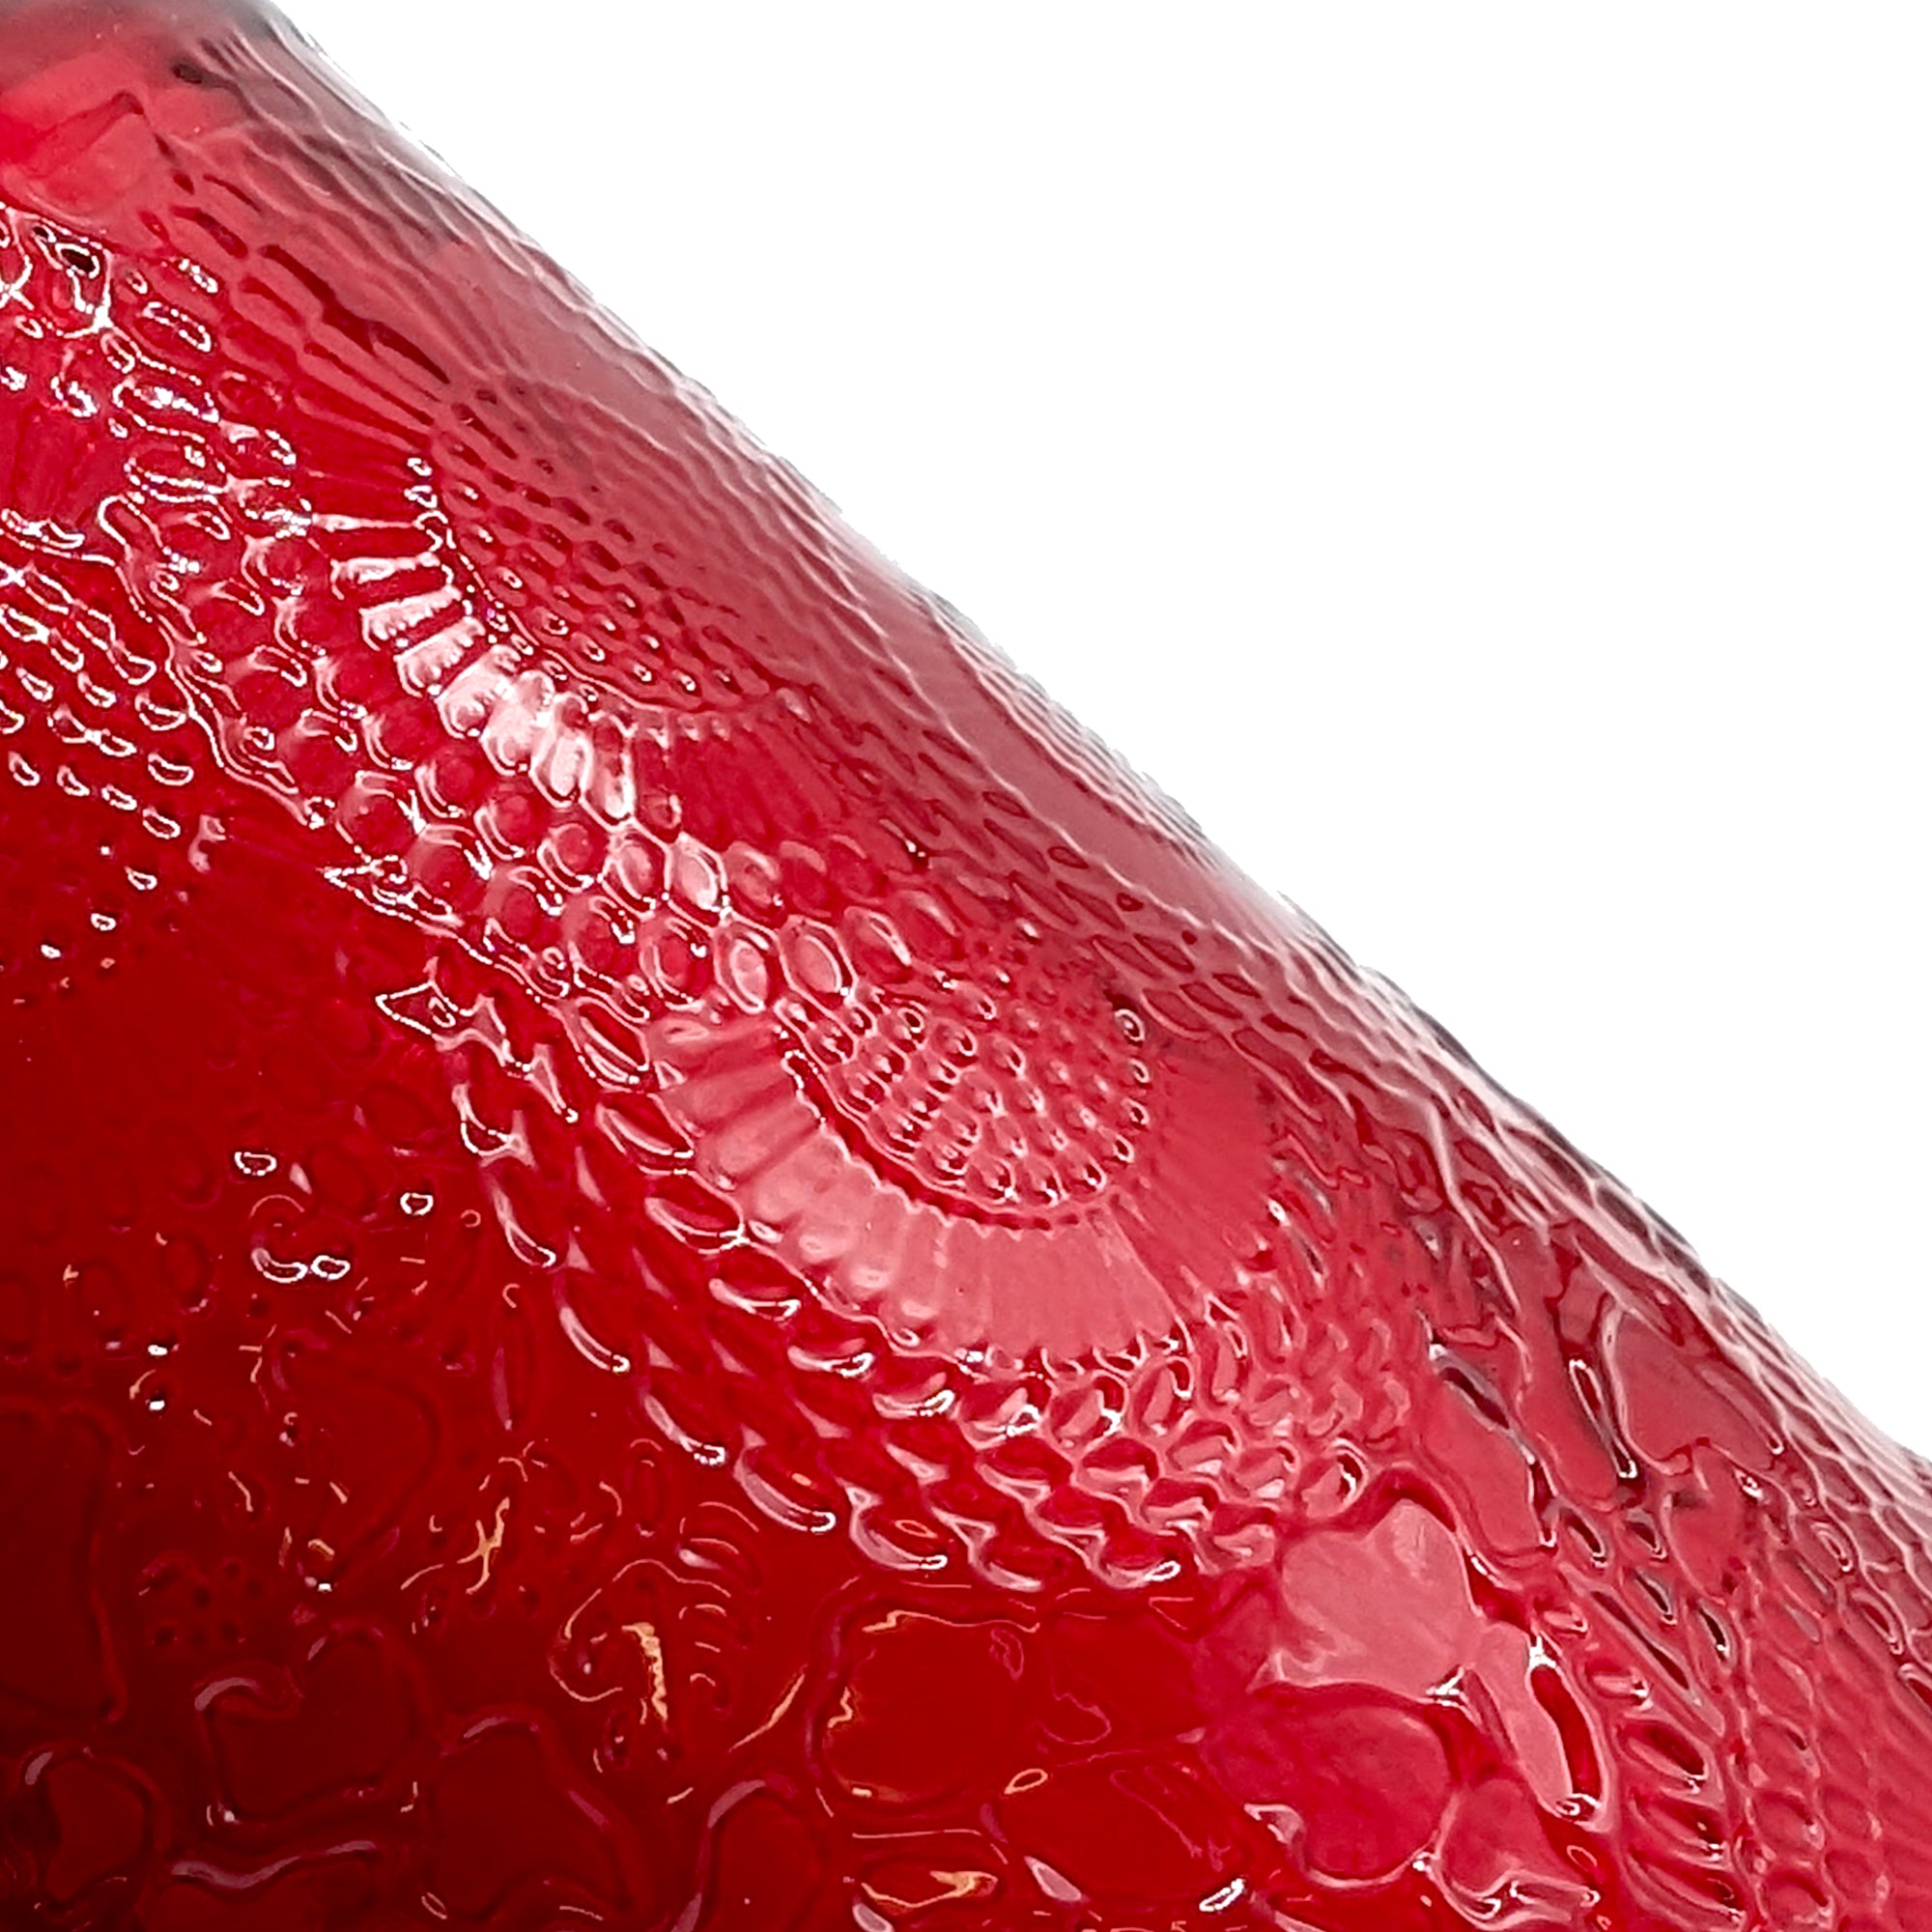 Cello - Gemstone Candle 200g - Foraged Wild Berries with Cherry Quartz